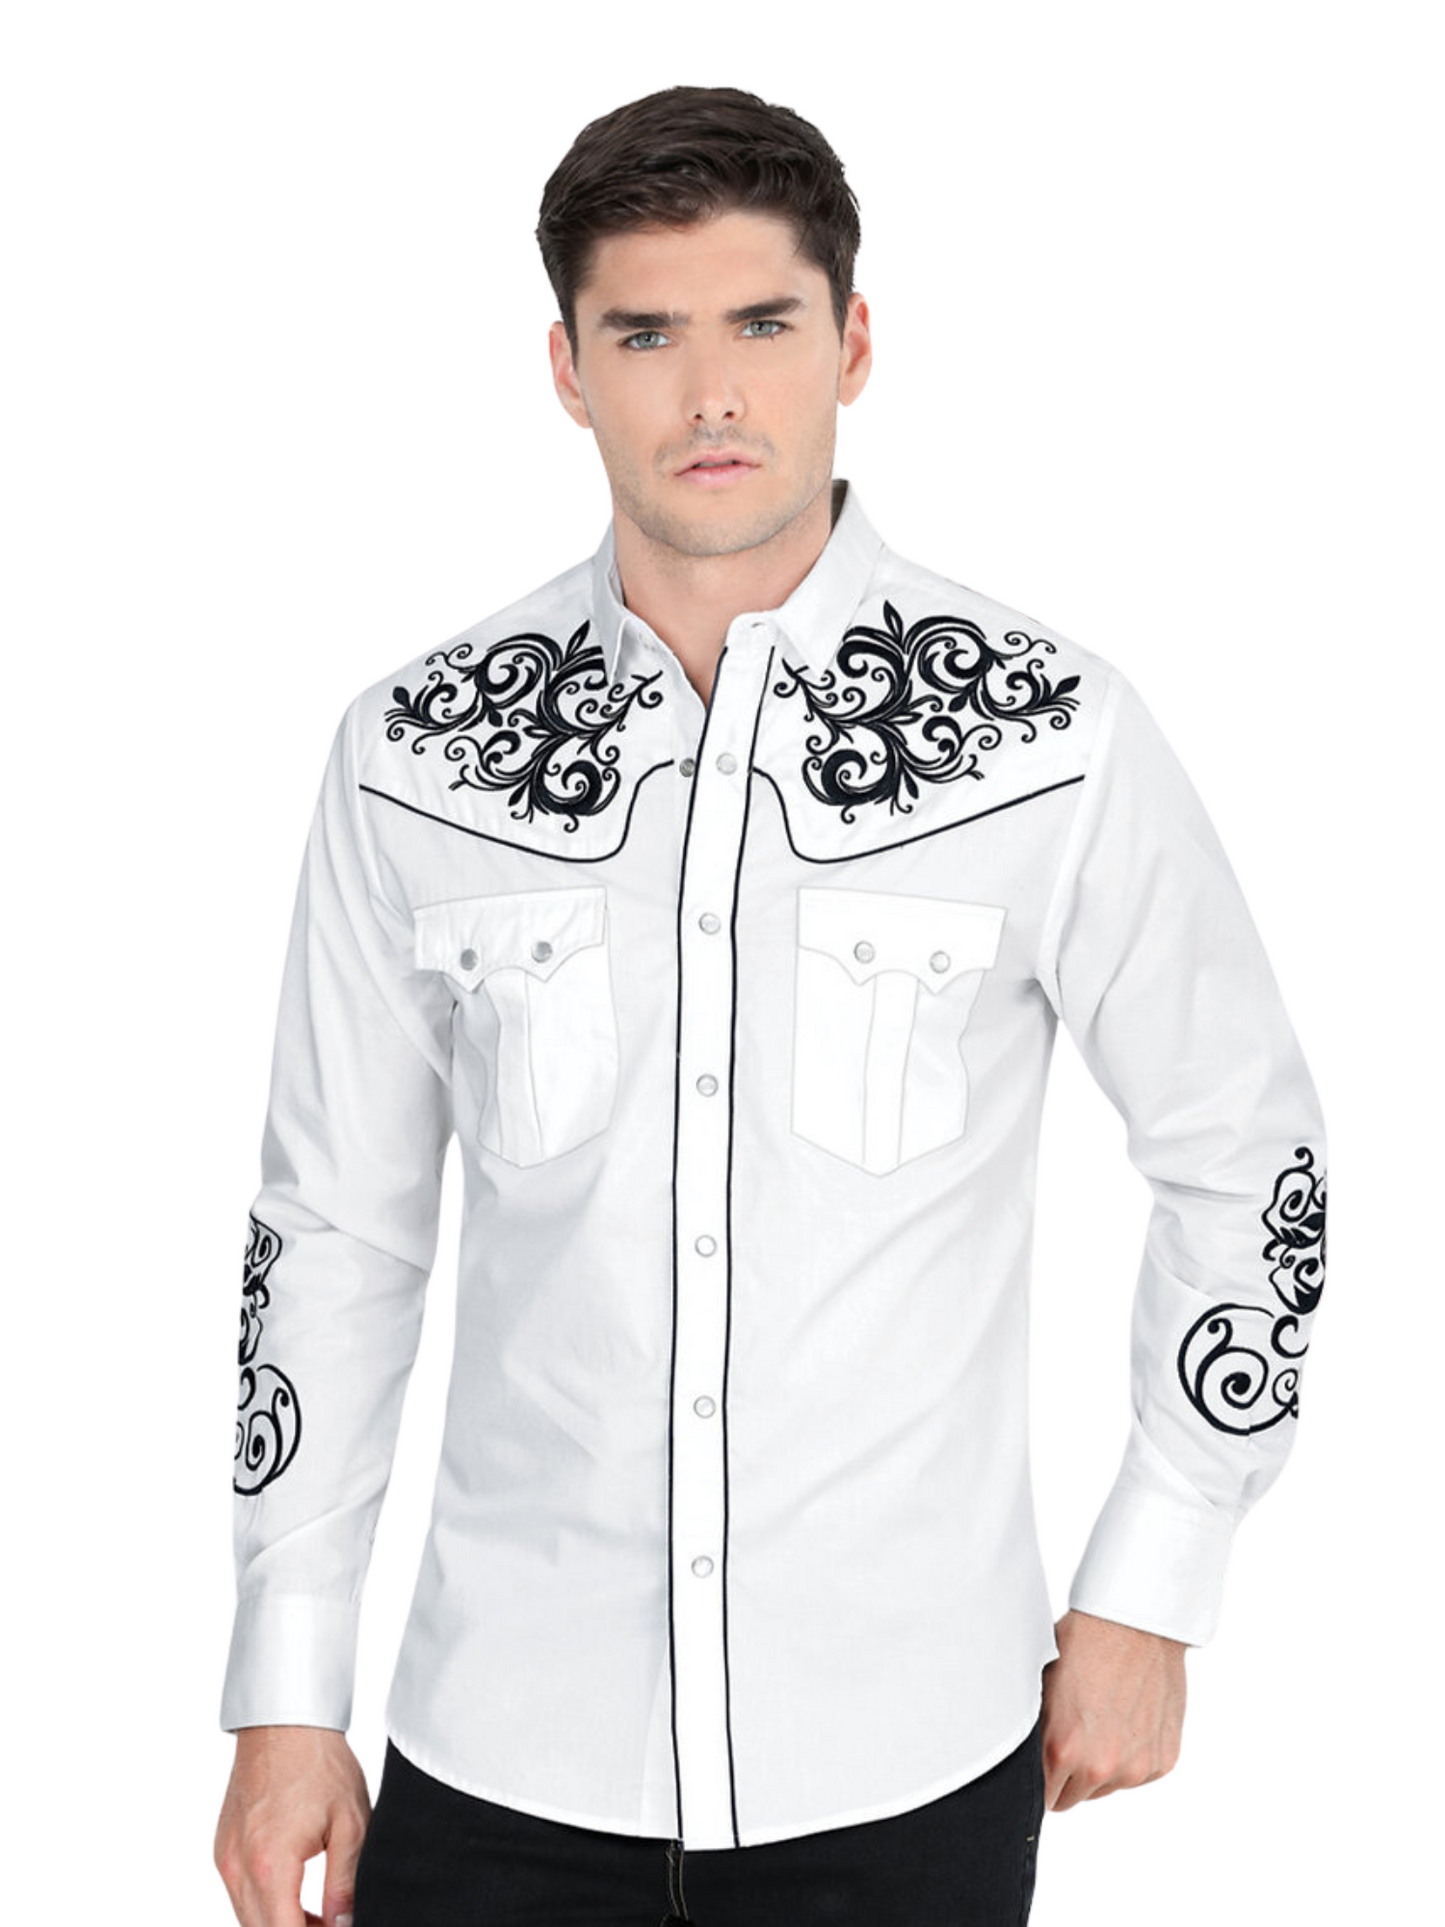 Embroidered Long Sleeve Denim Shirt for Men 'Montero' - ID: 3503 Western Shirt Montero White